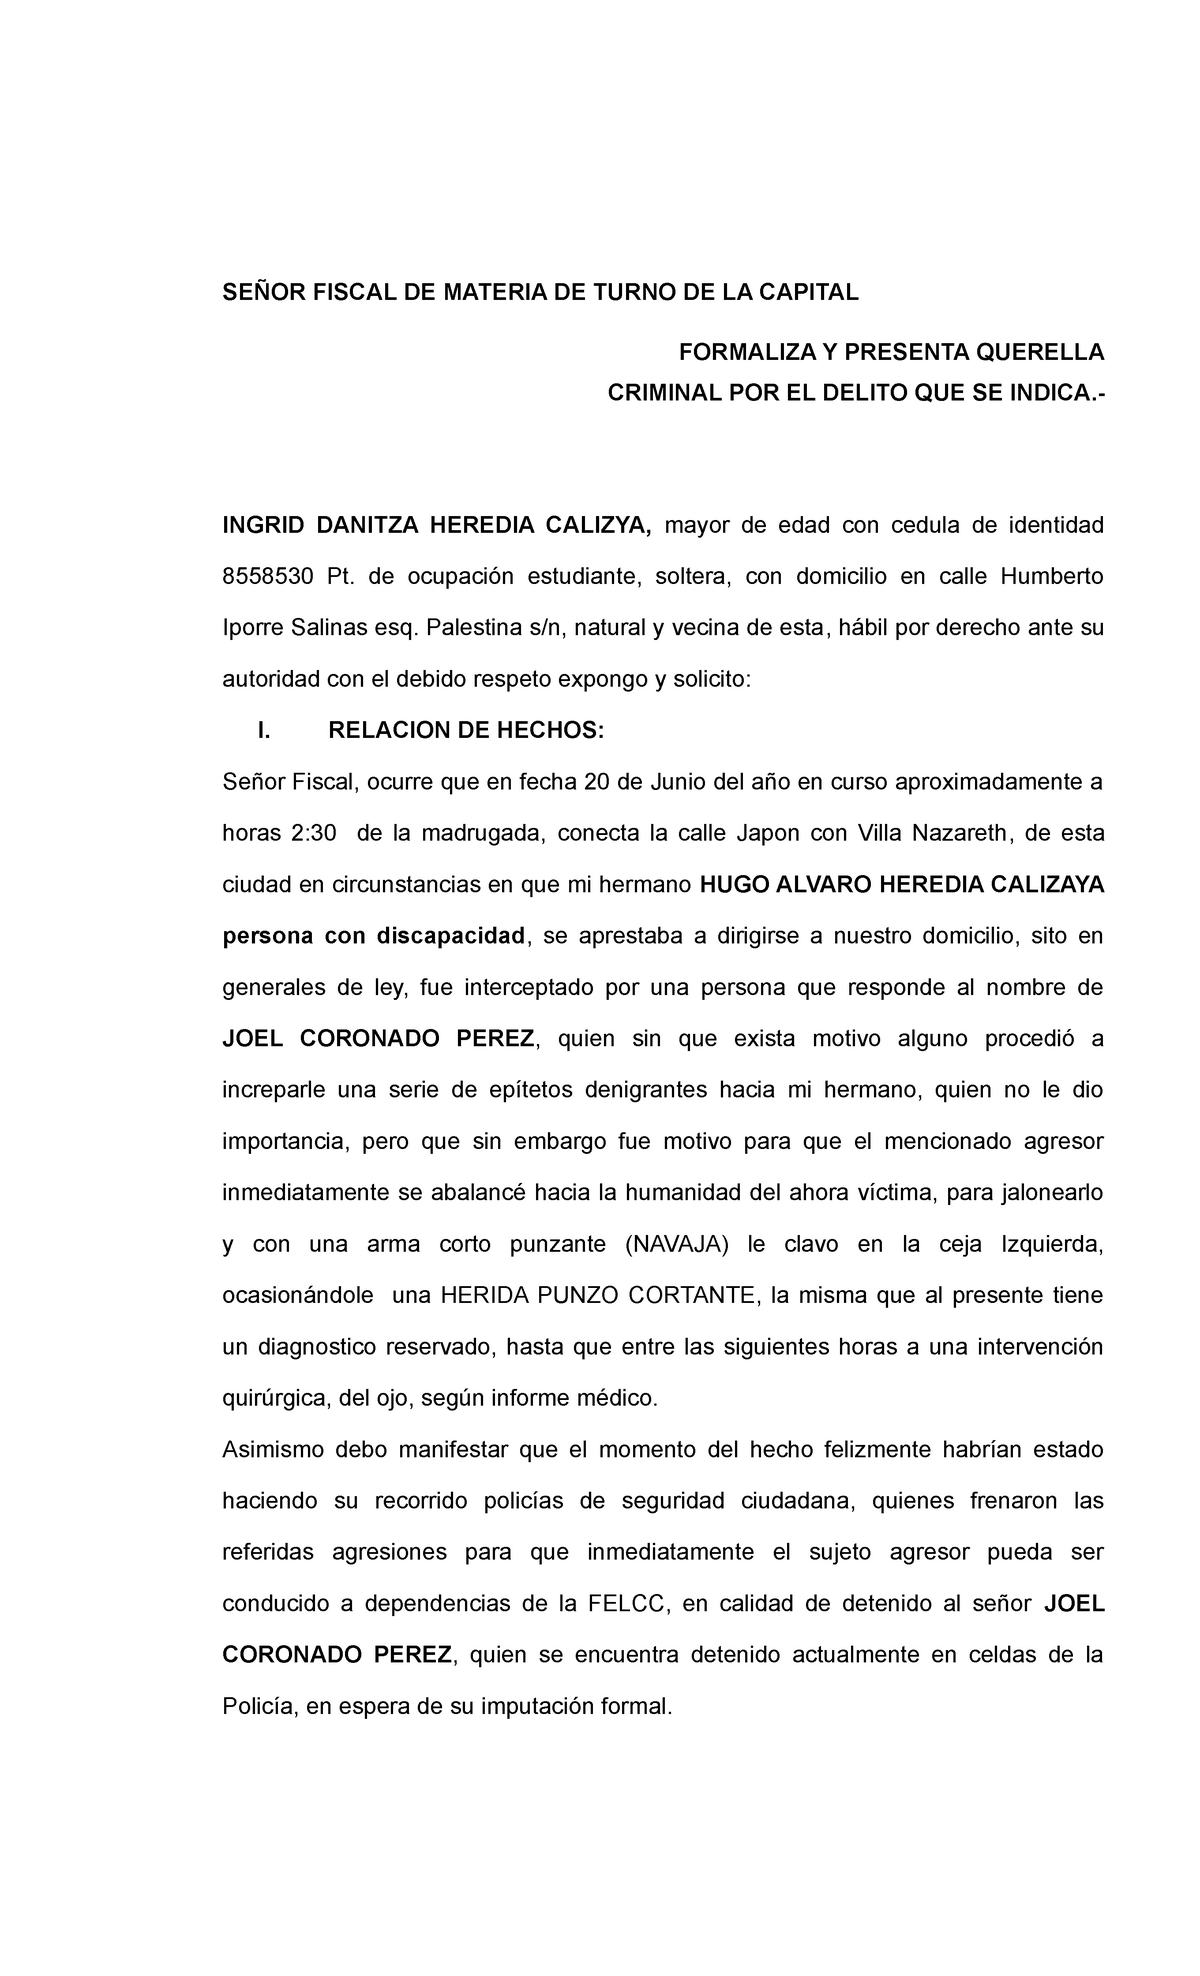 presentacion de querella y objecion de querella - SEÑOR FISCAL DE MATERIA  DE TURNO DE LA CAPITAL - Studocu